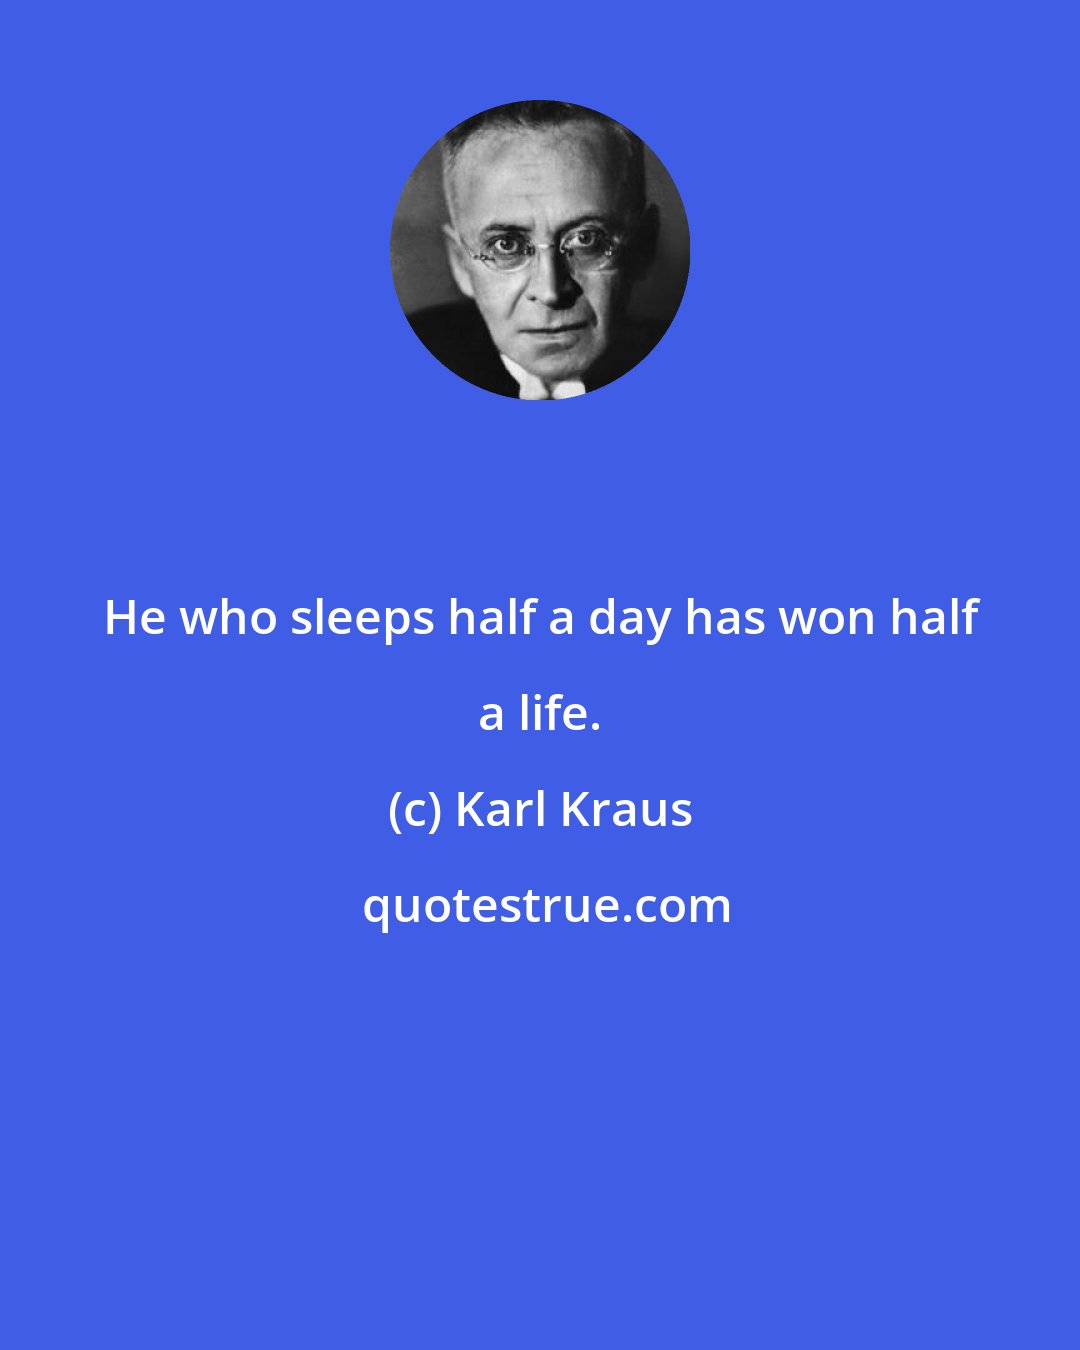 Karl Kraus: He who sleeps half a day has won half a life.